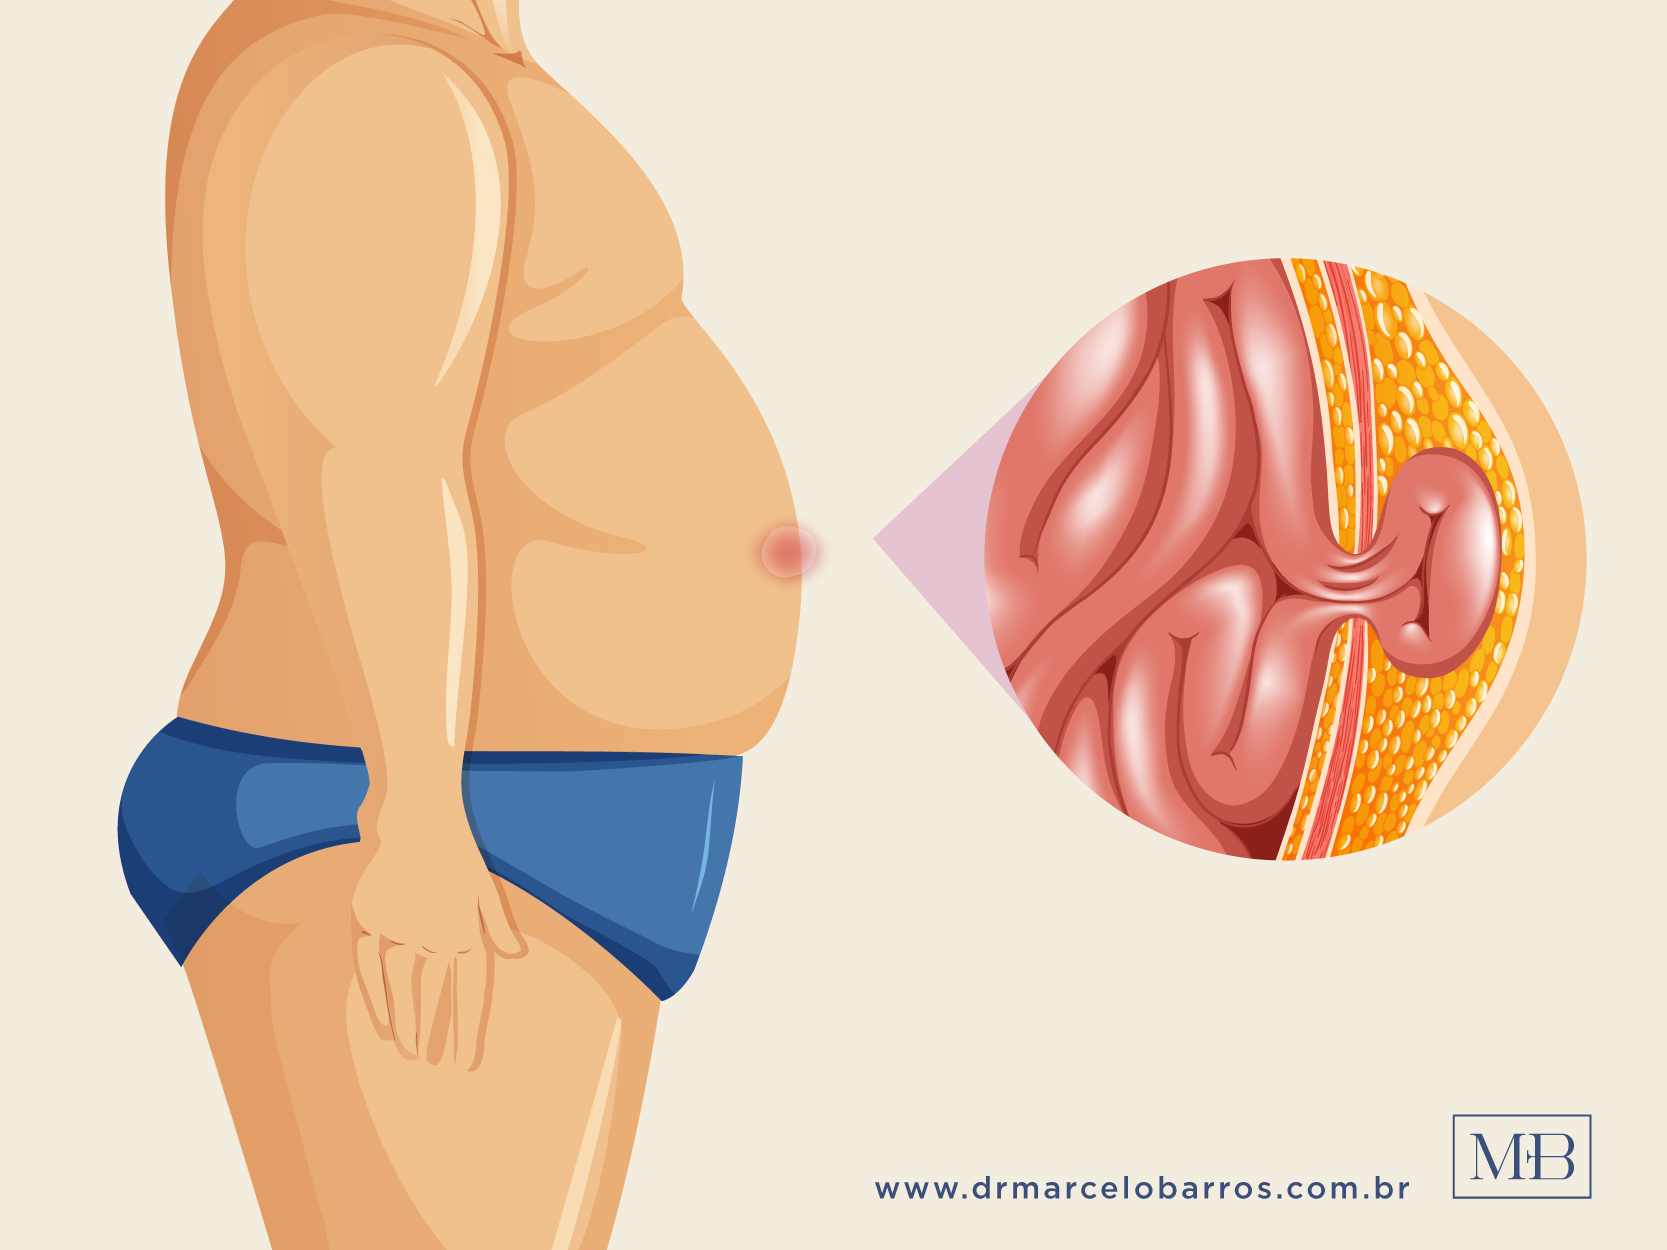 Dor abdominal após o exercício físico? Pode ser hérnia – Dr